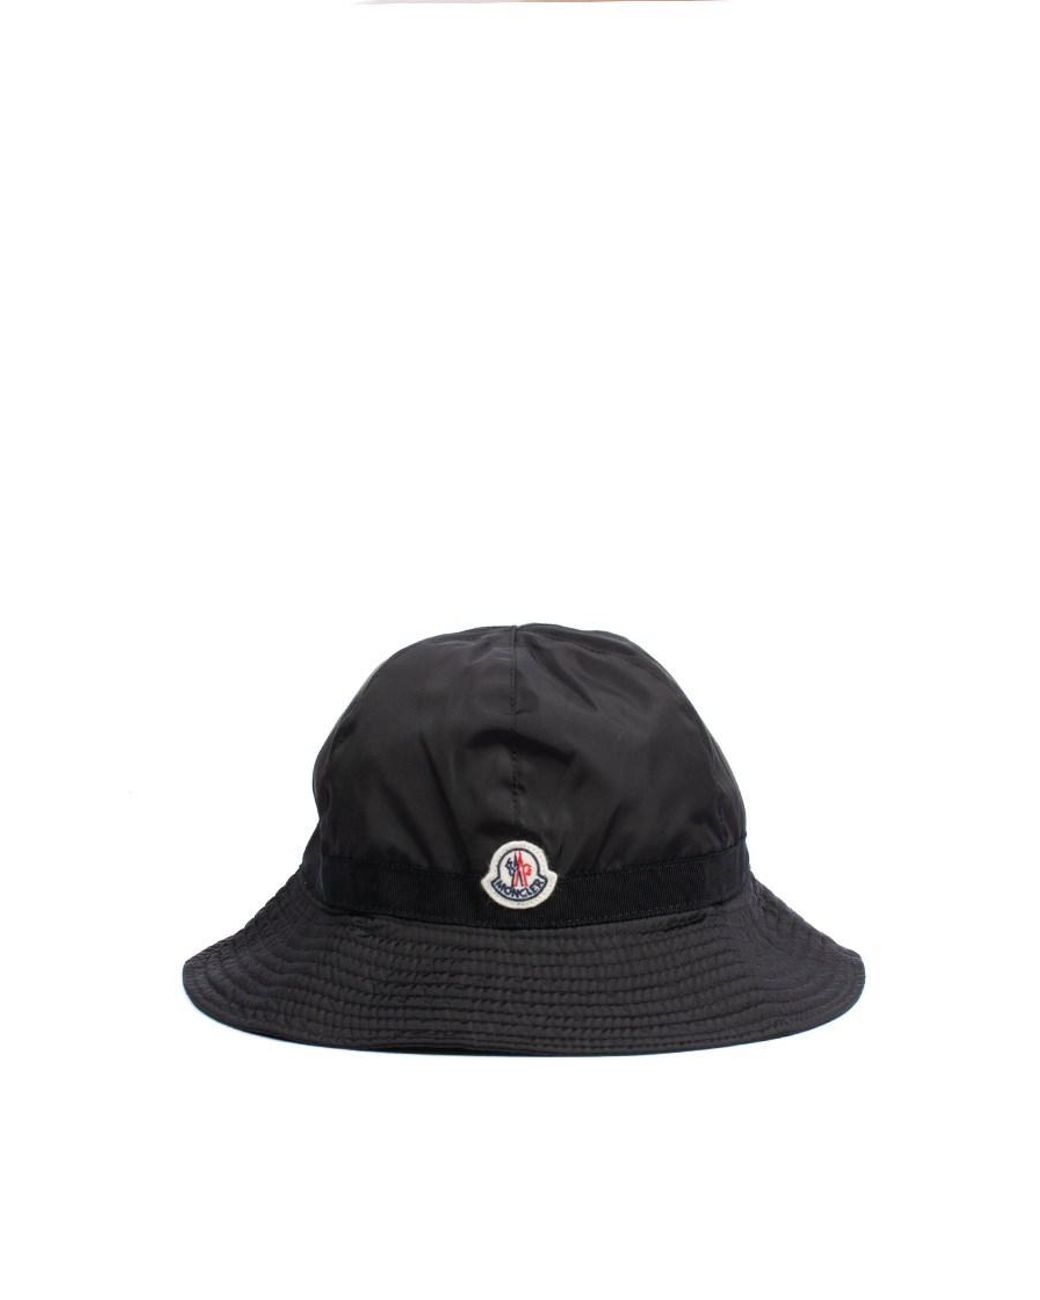 Lyst - Moncler Nylon Bucket Hat in Black